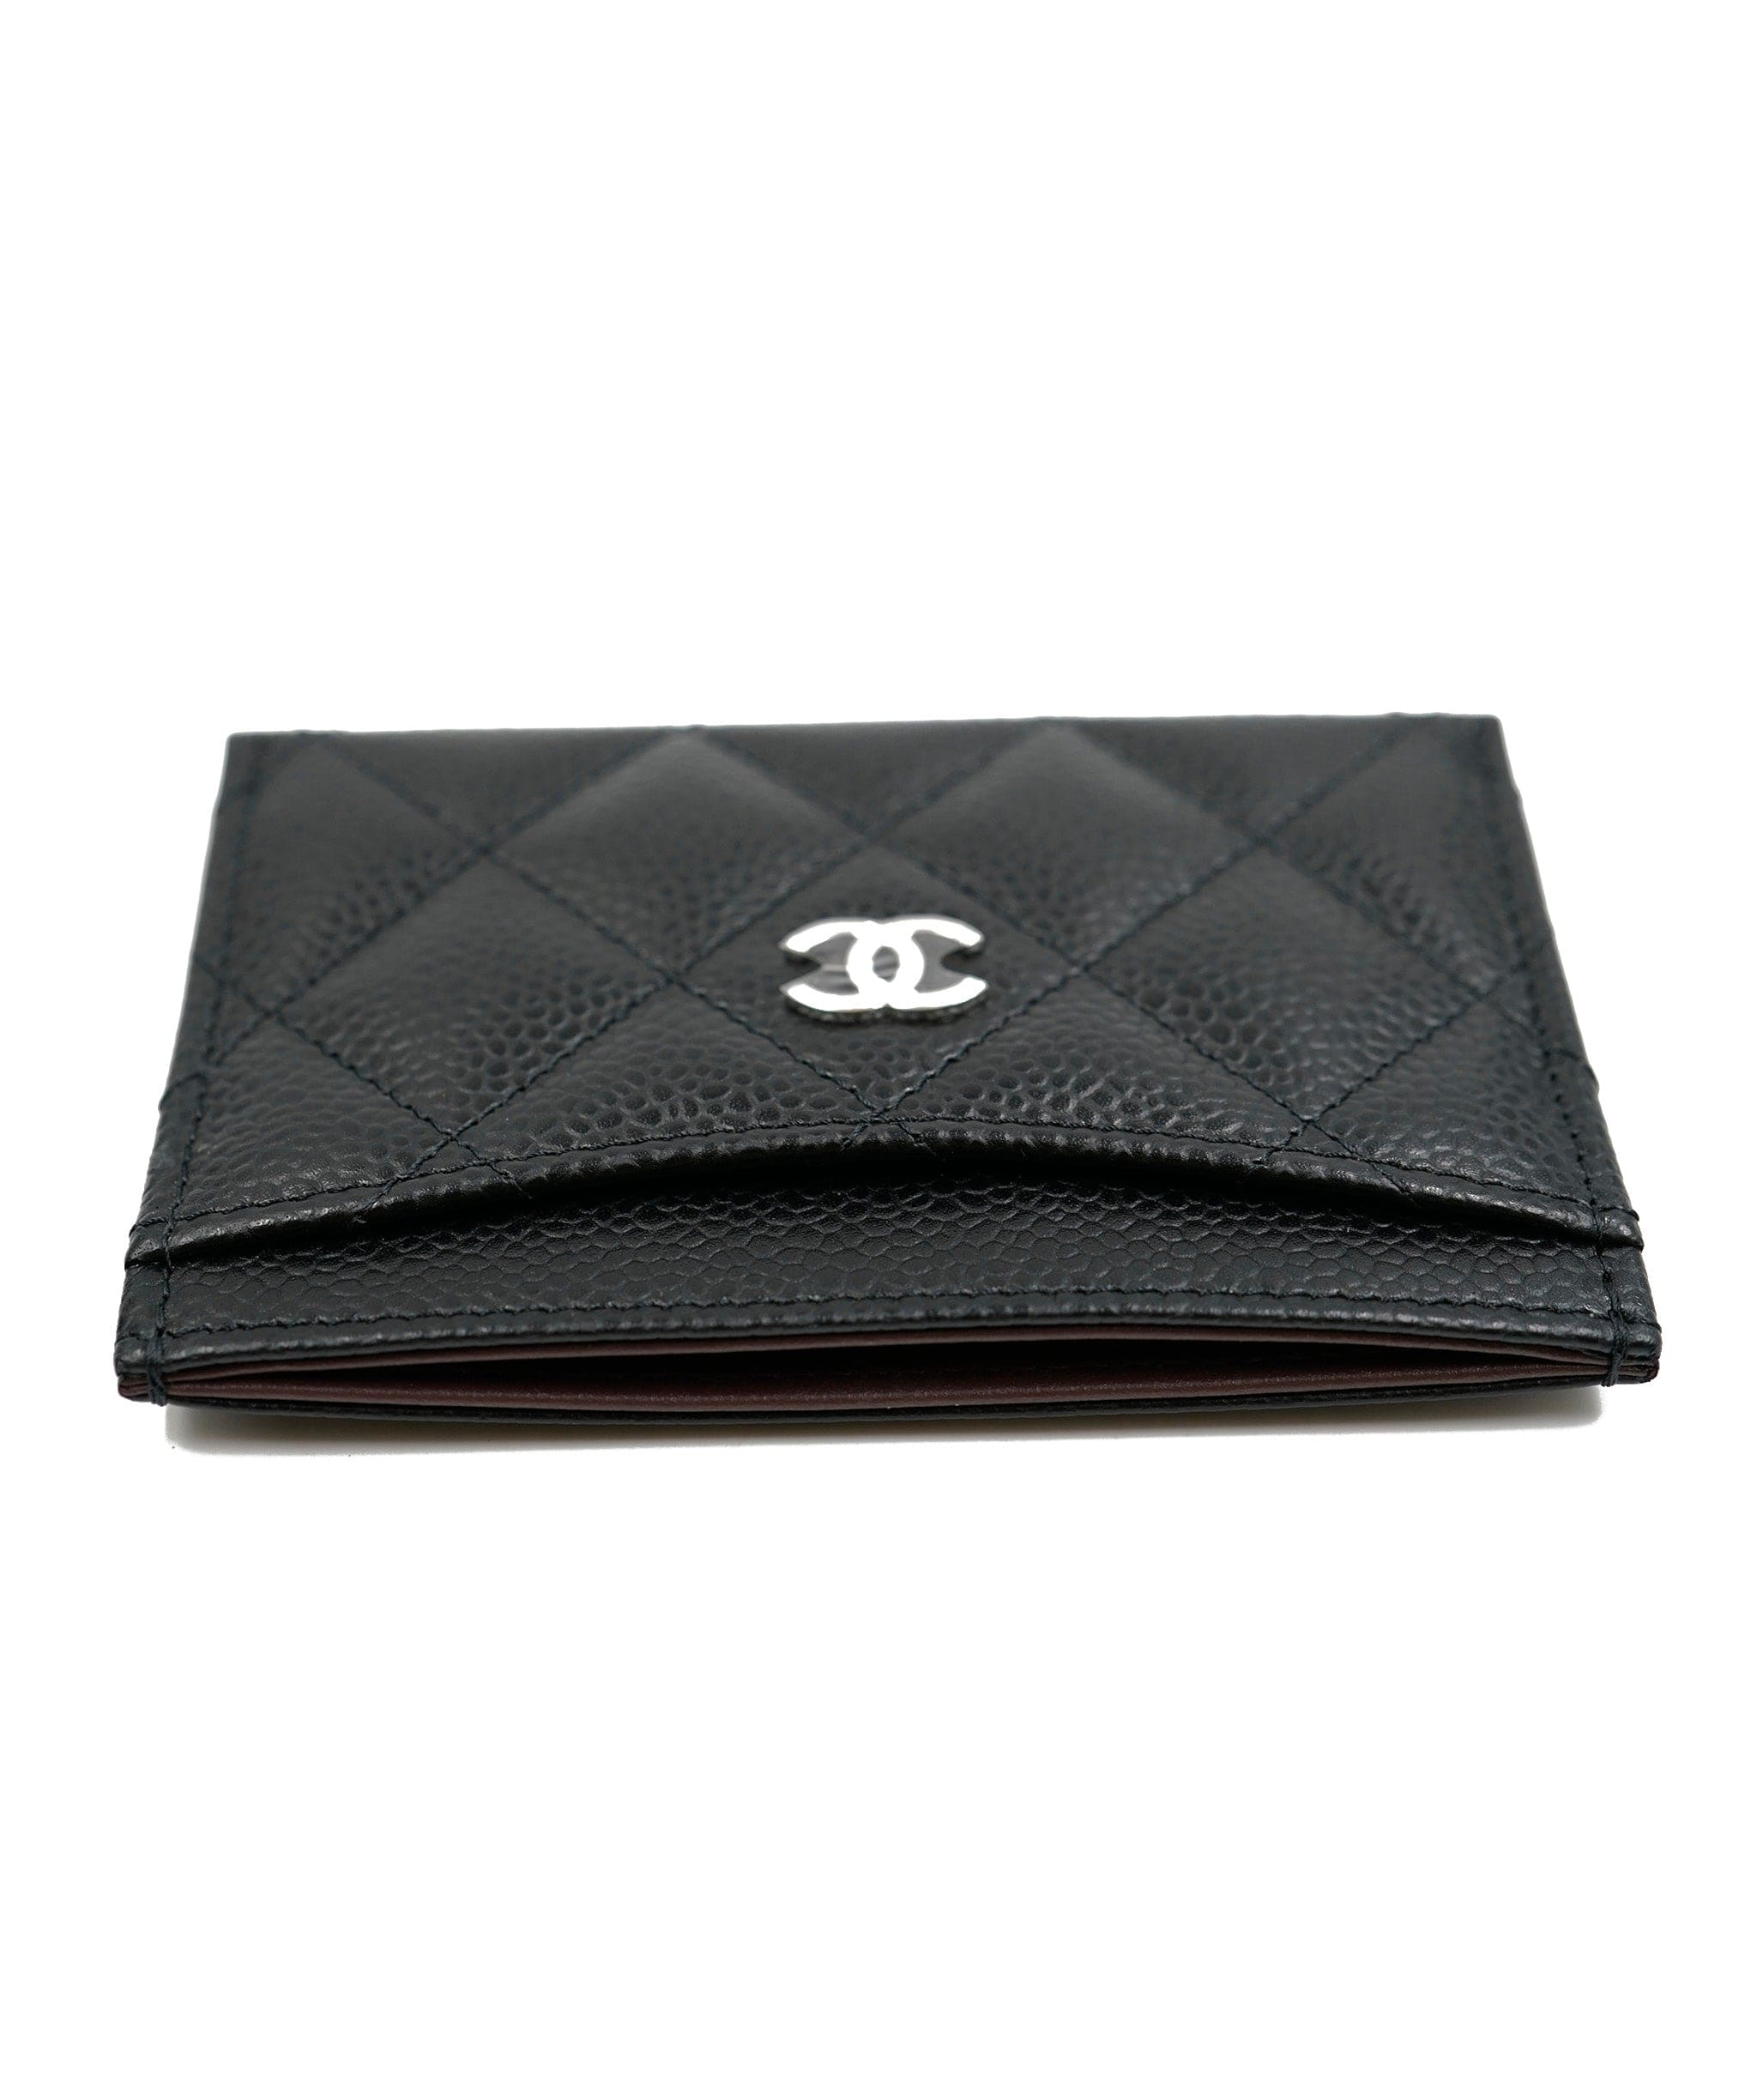 Chanel Chanel black card holder with SHW ASL5287